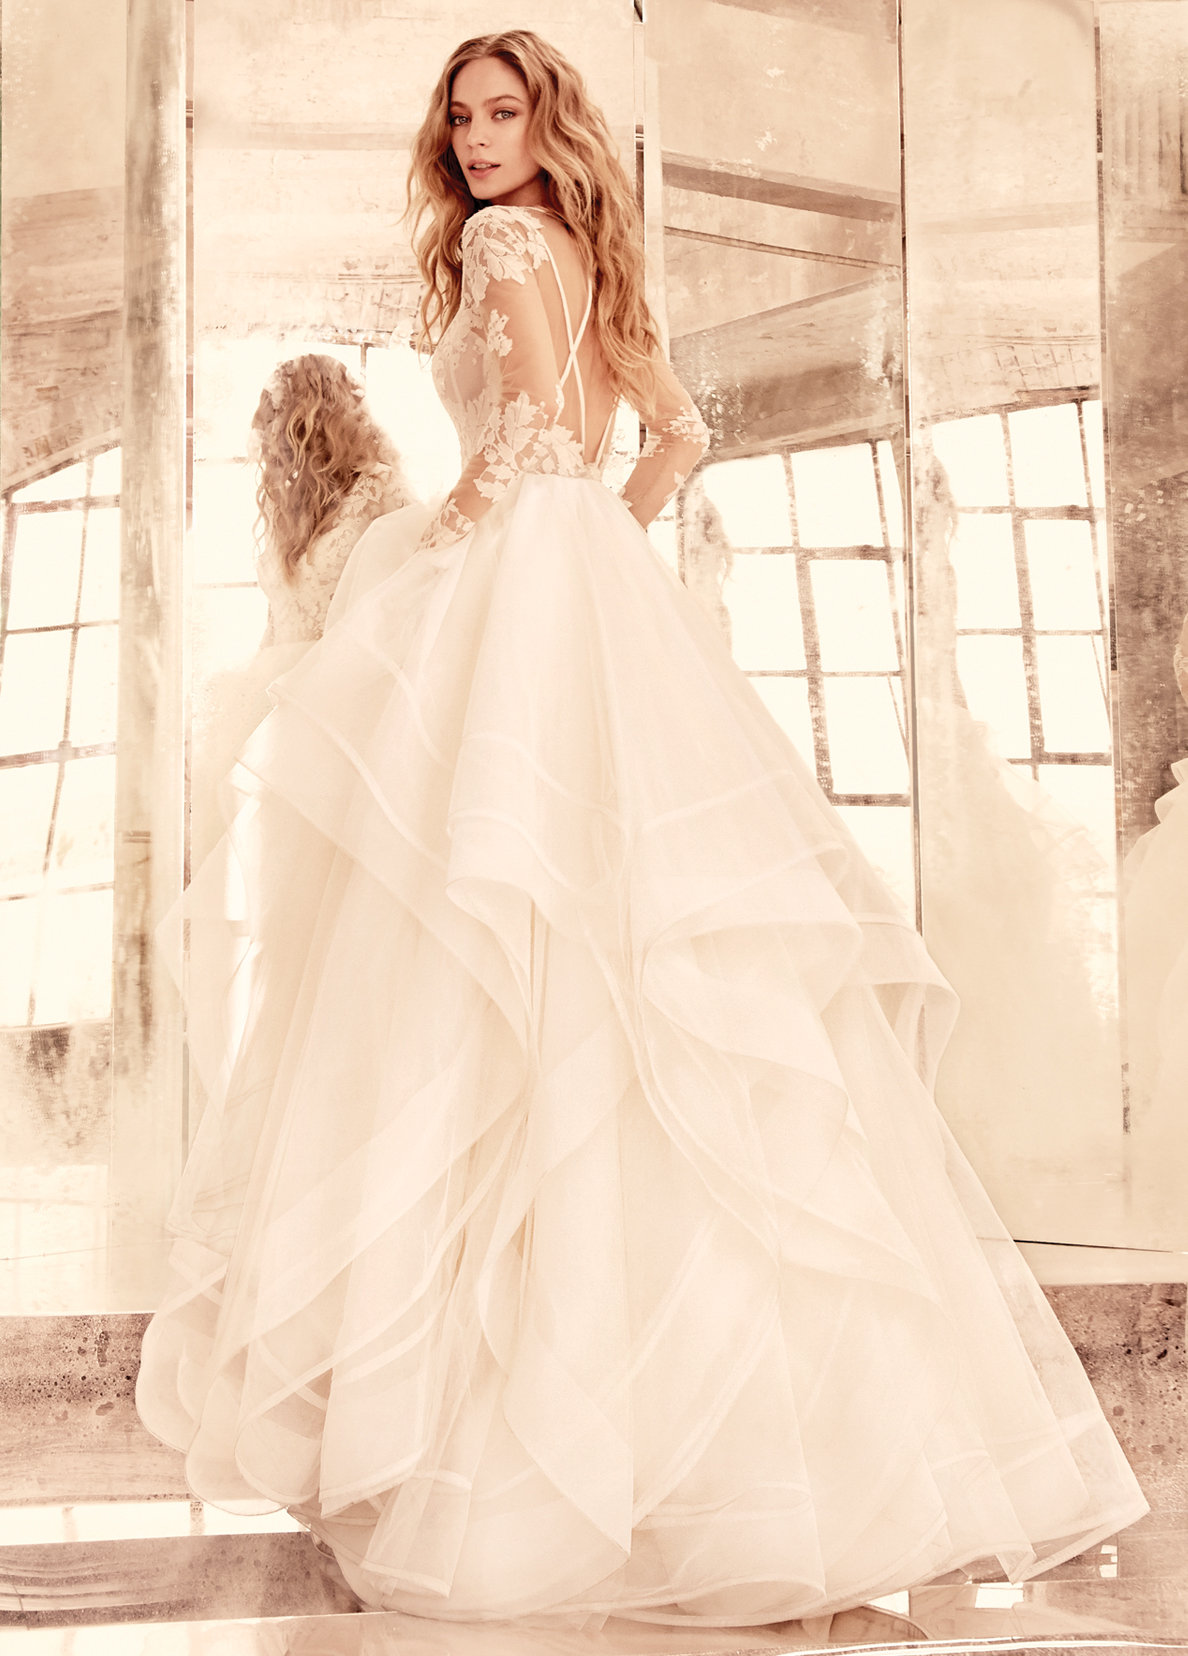 Elysia by Hayley Paige. Image: Eternal Bridal